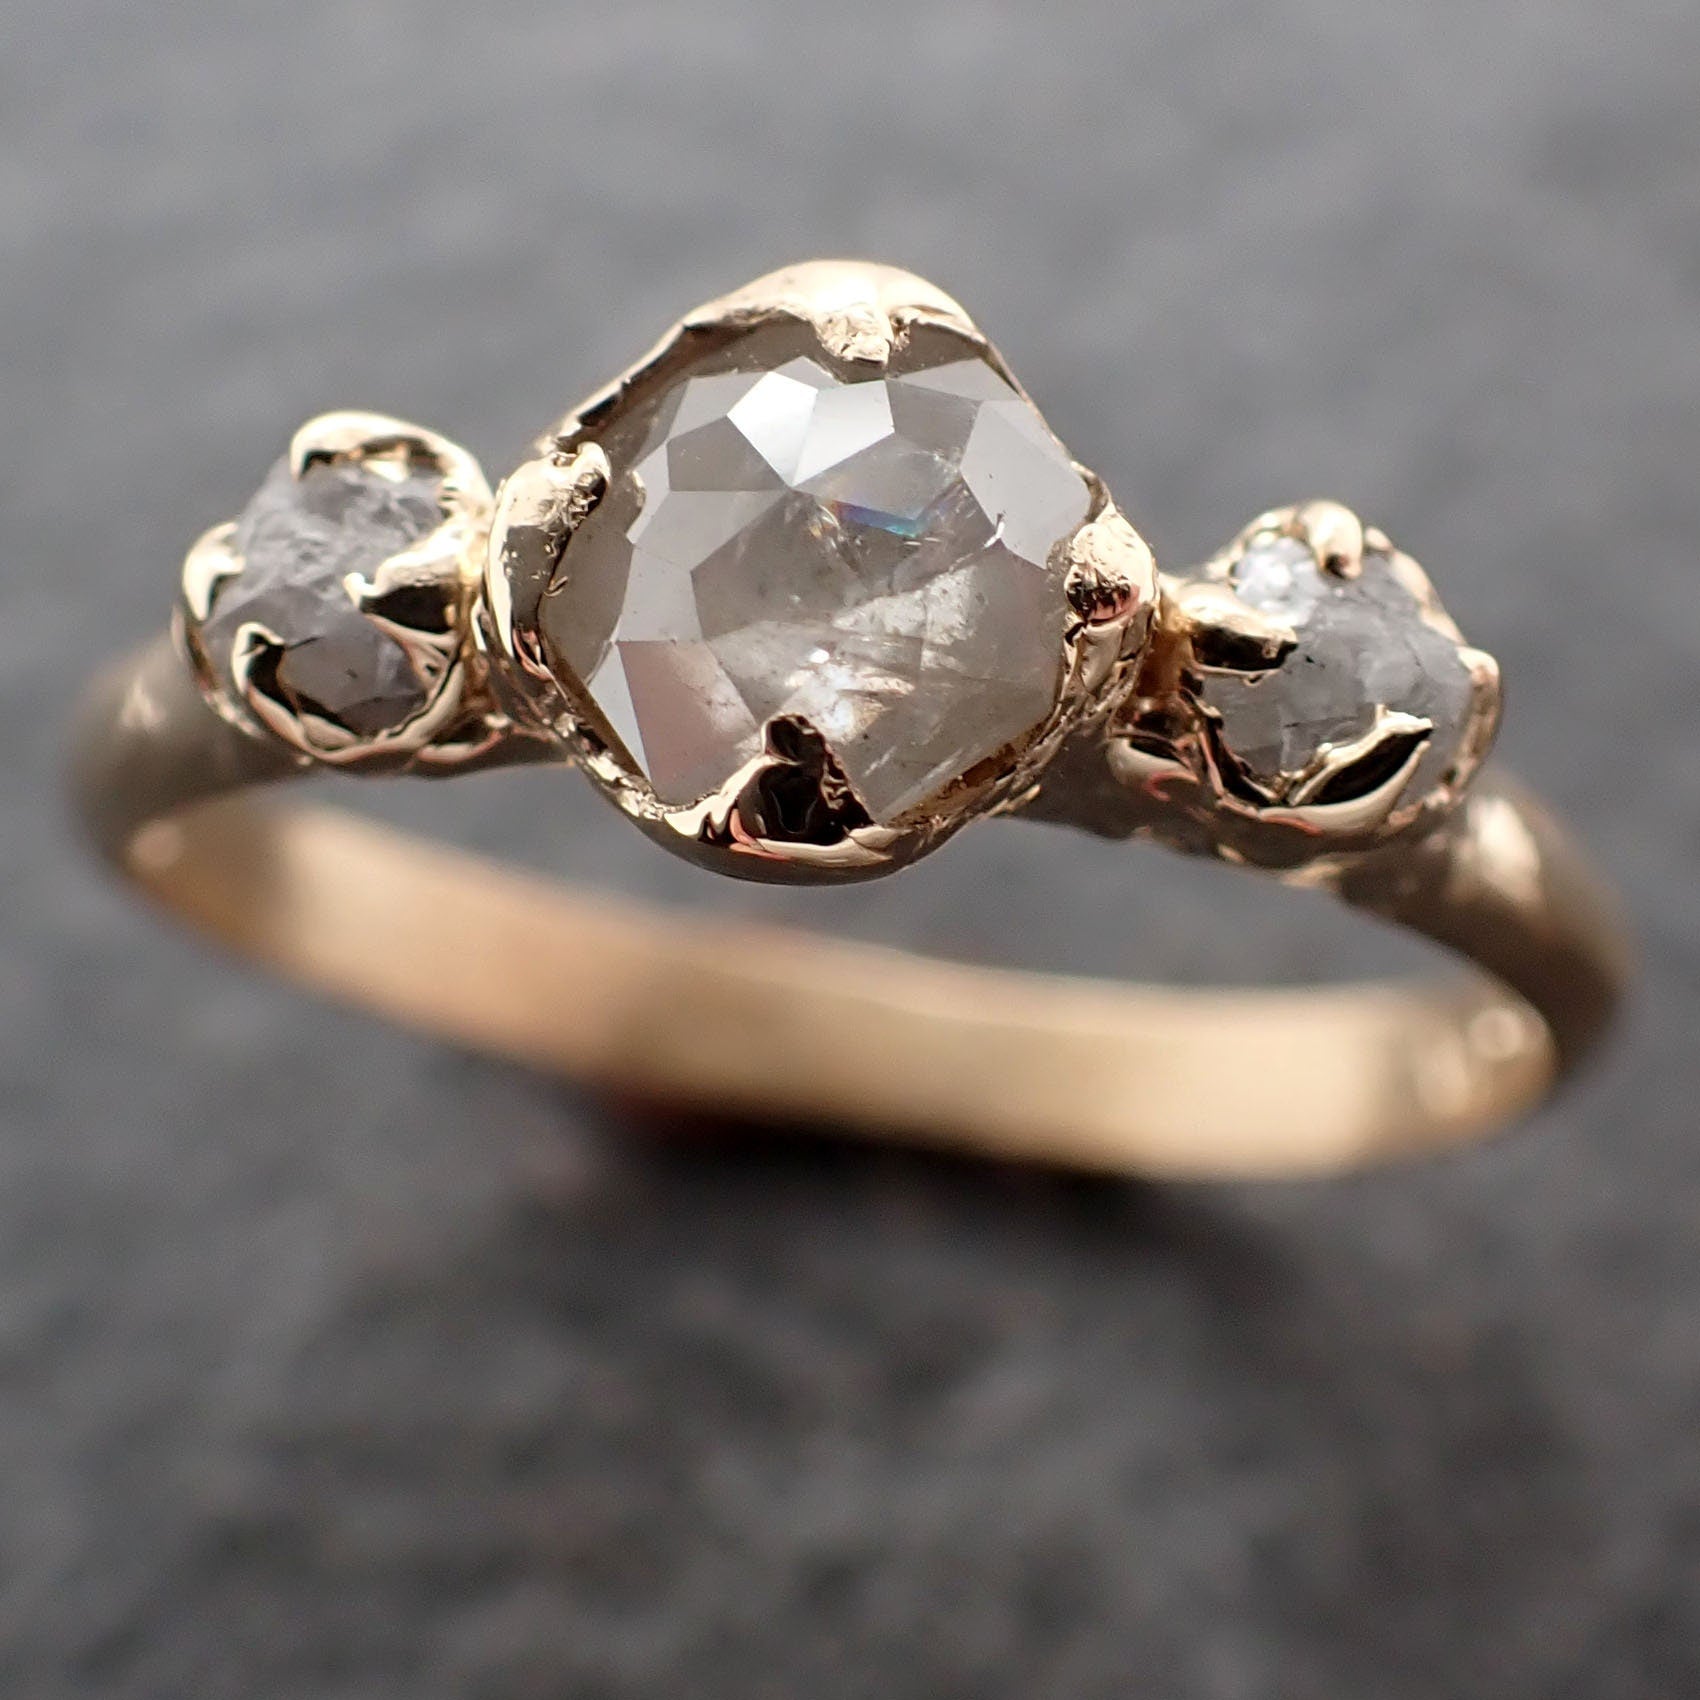 Faceted Fancy cut white Diamond Multi stone Engagement 14k Yellow Gold Wedding Ring byAngeline 3043